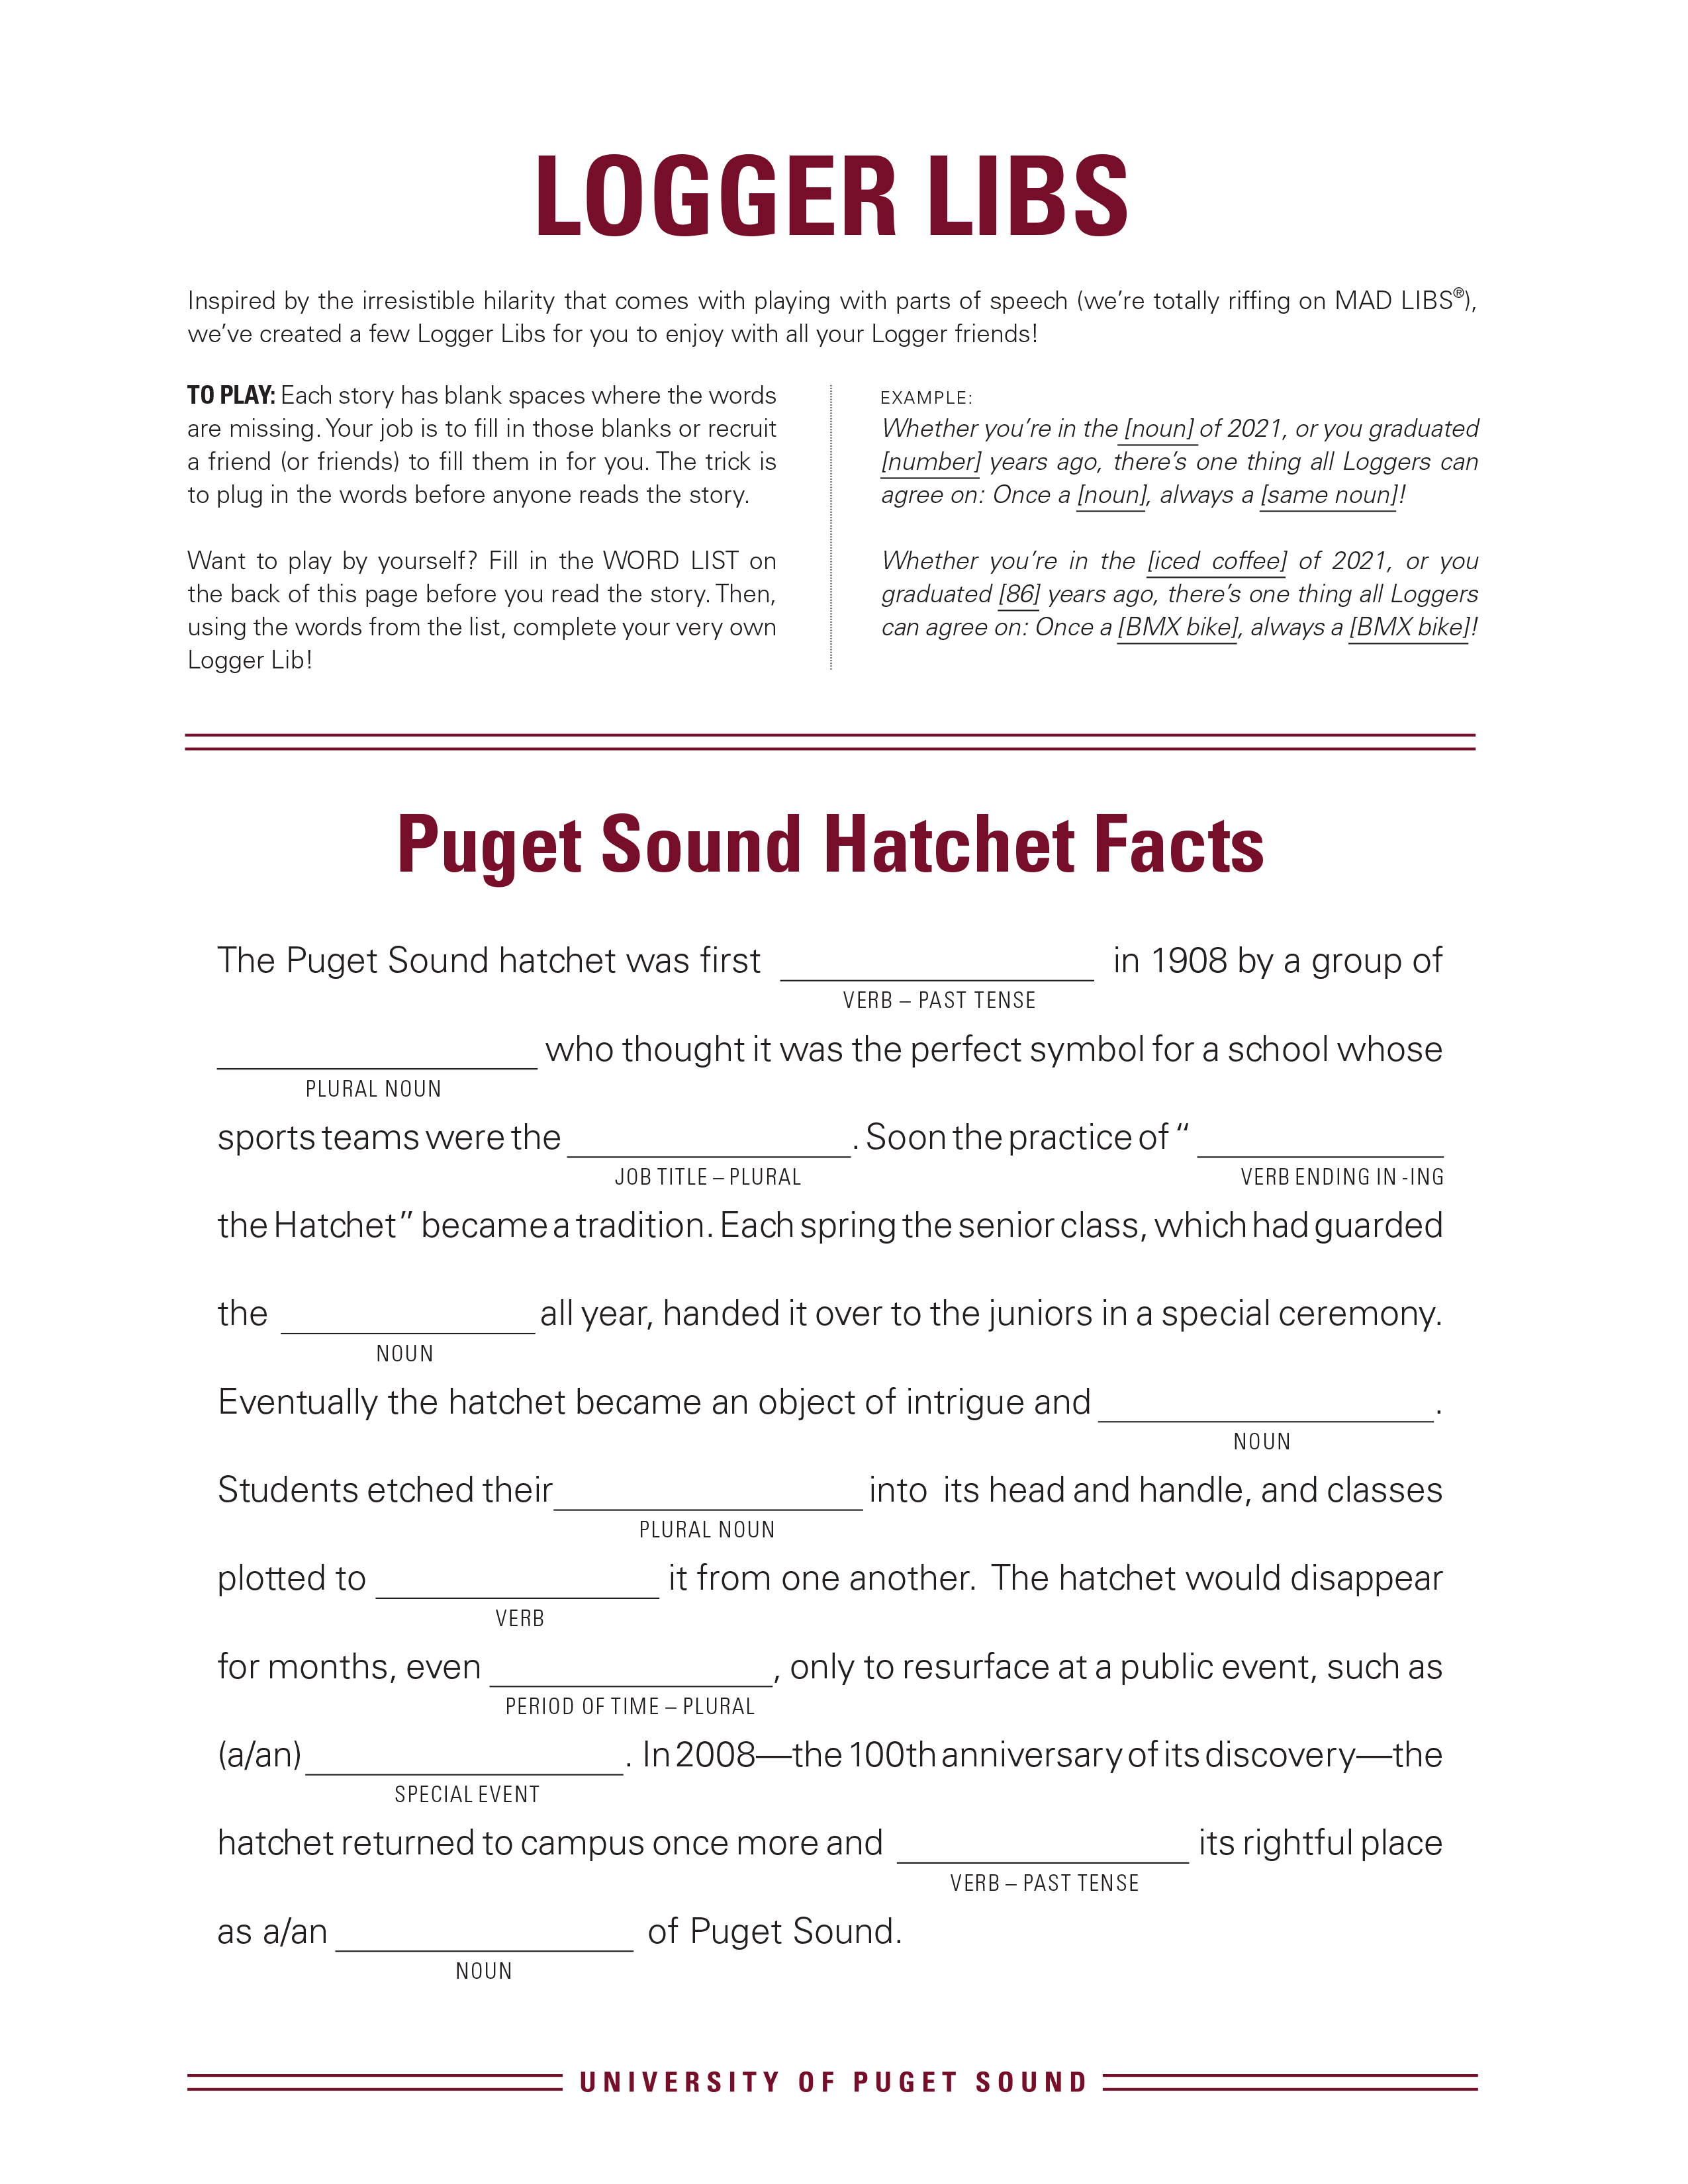 Logger Libs Hatchet Facts